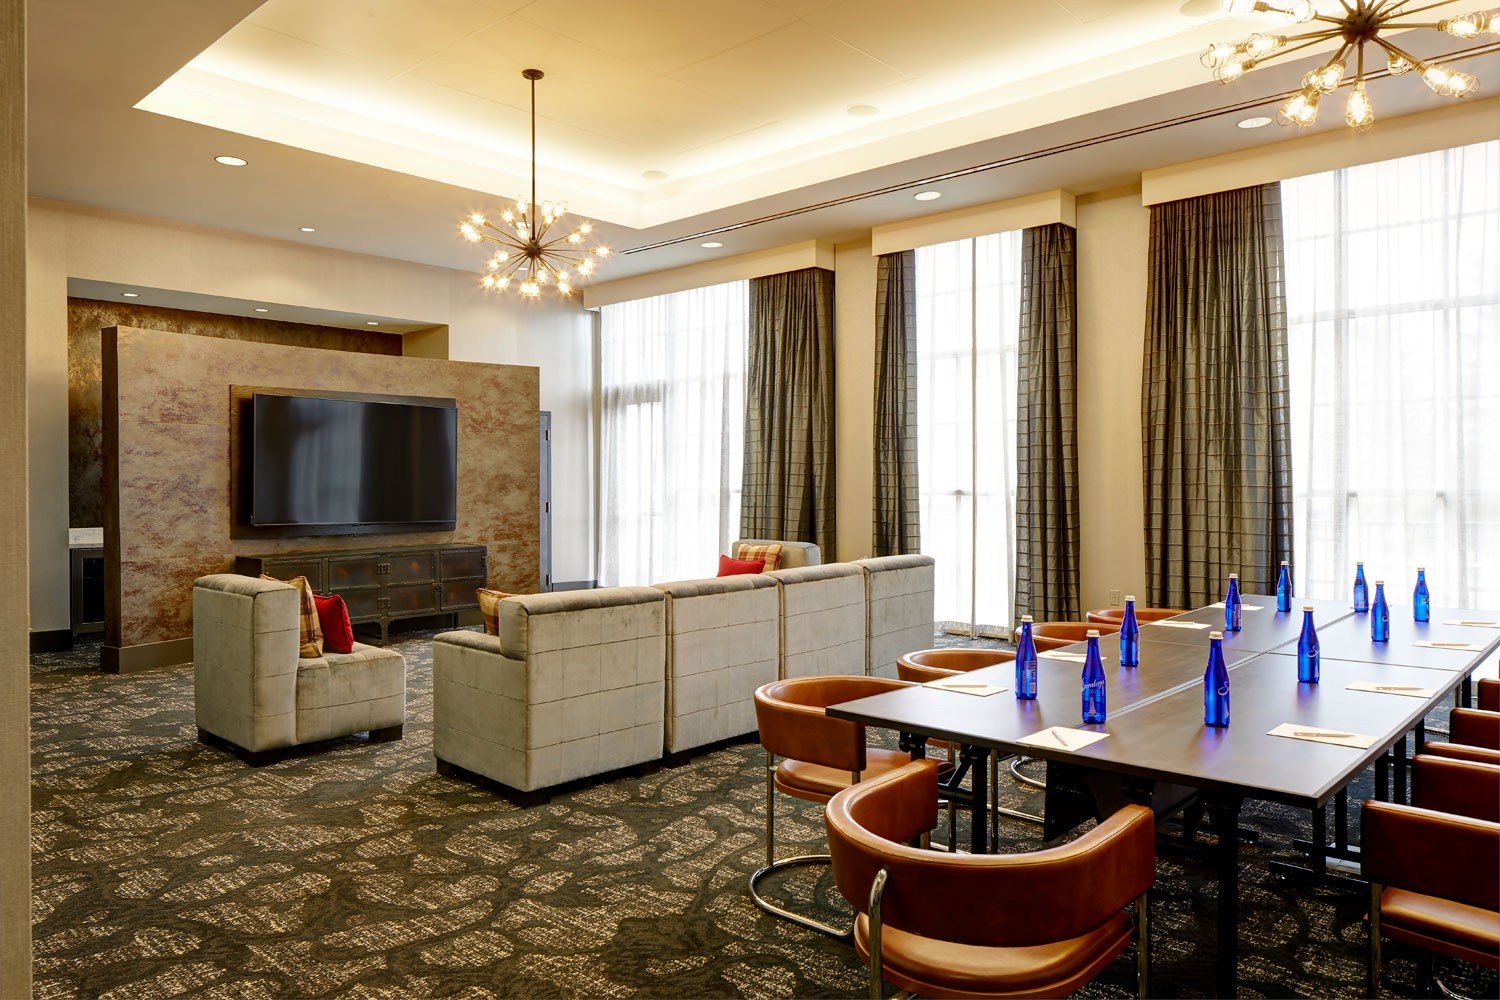 Archer Hotel Burlington - Hospitality Lounge with boardroom table